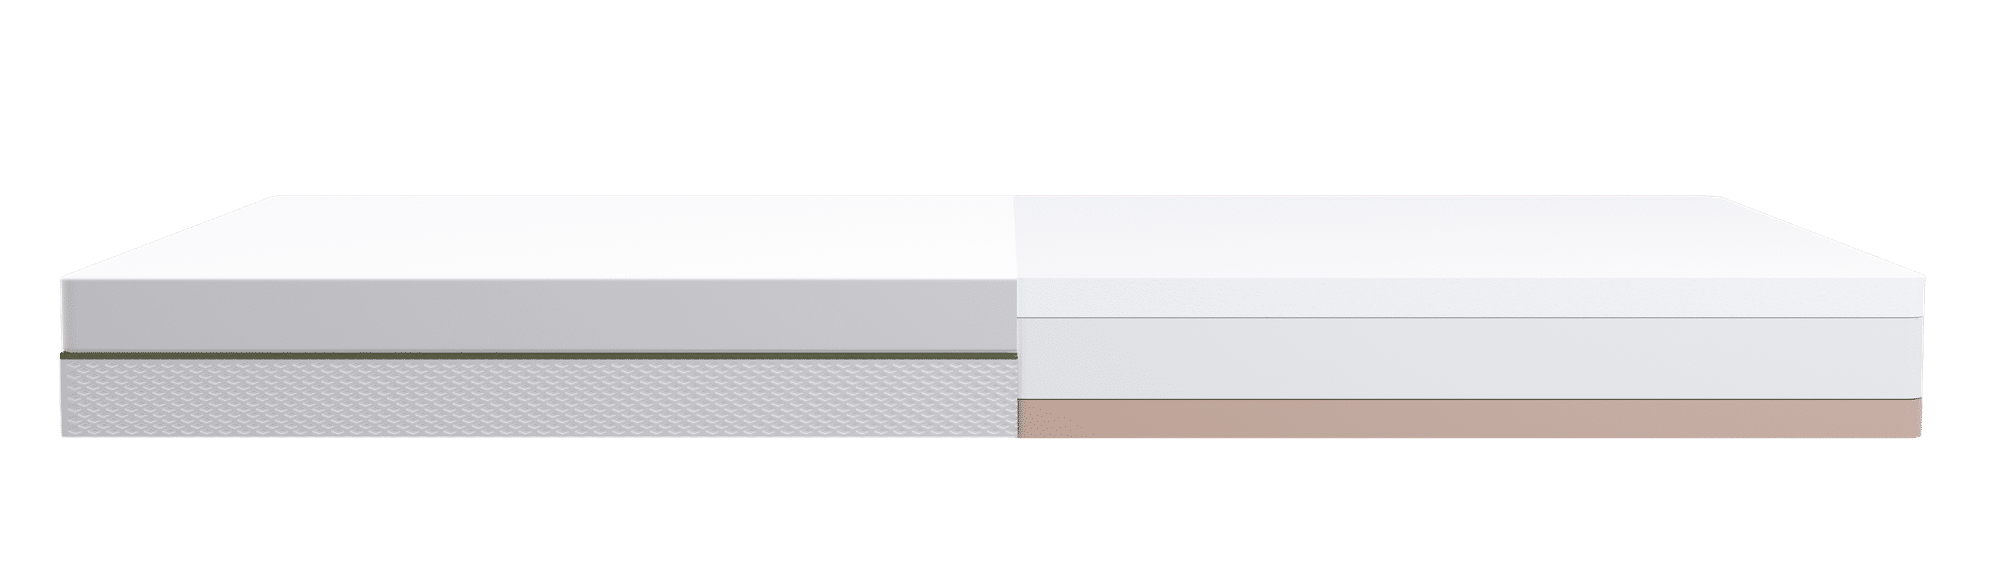 FLEXA Reversible spring mattress with cotton cover, 200x140